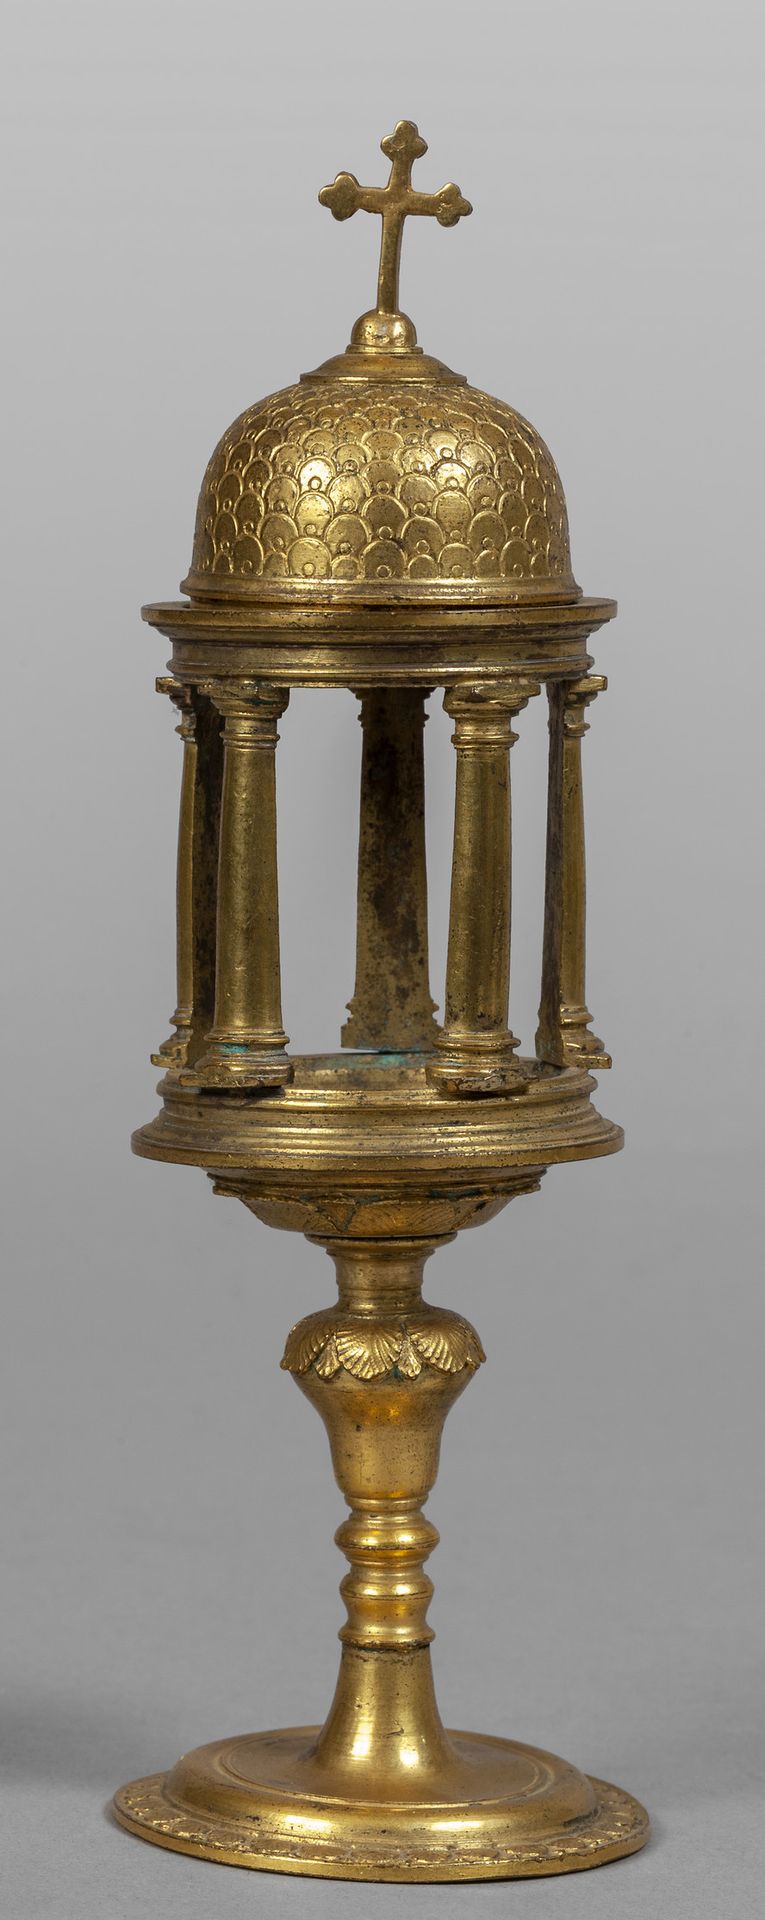 Ostensorio in bronzo dorato, sec. XVII Custodia de bronce dorado, siglo XVII
h. &hellip;